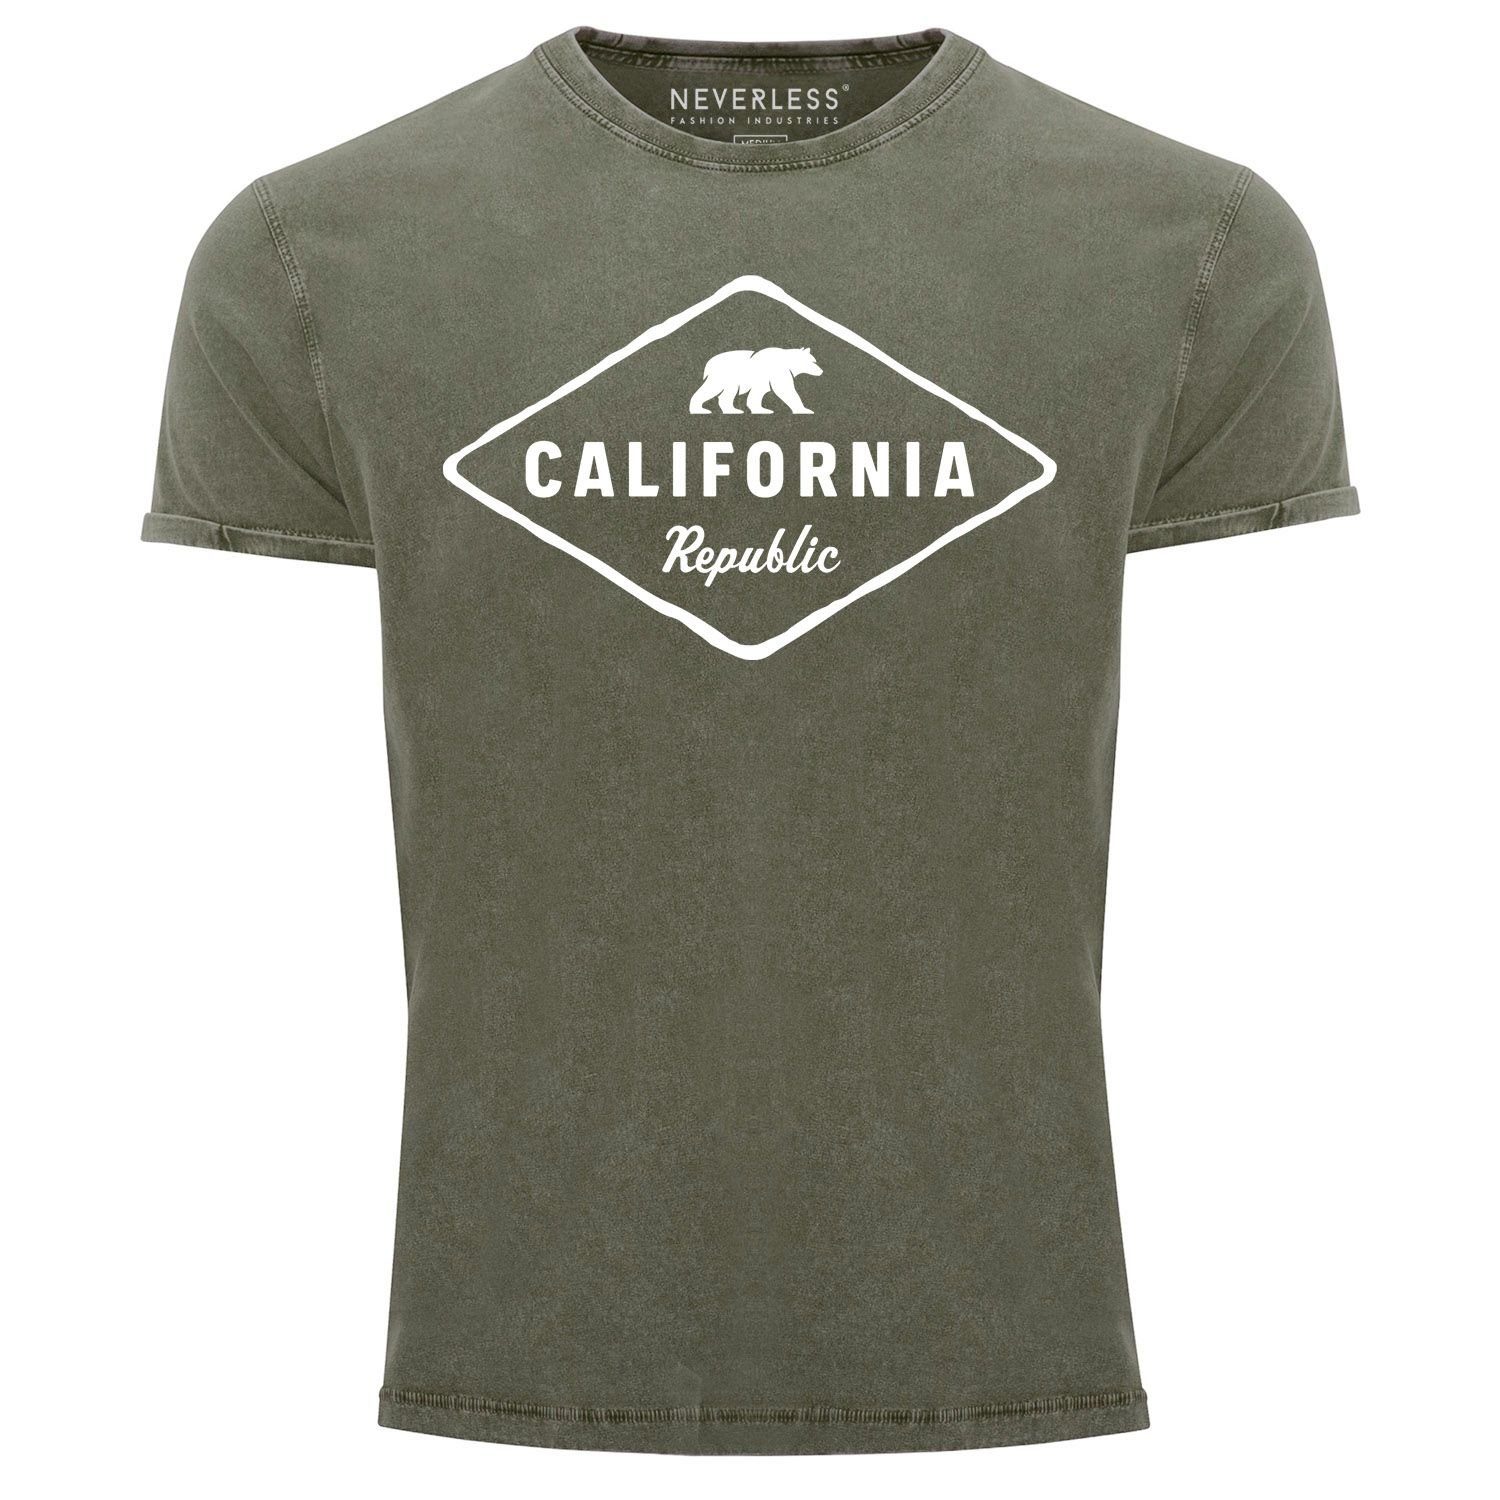 Garantie Neverless Print-Shirt Herren Vintage USA State Sunshine Bär Neverless® Printshirt Print oliv T-Shirt Shirt California Aufdruck Badge mit Republic Bear